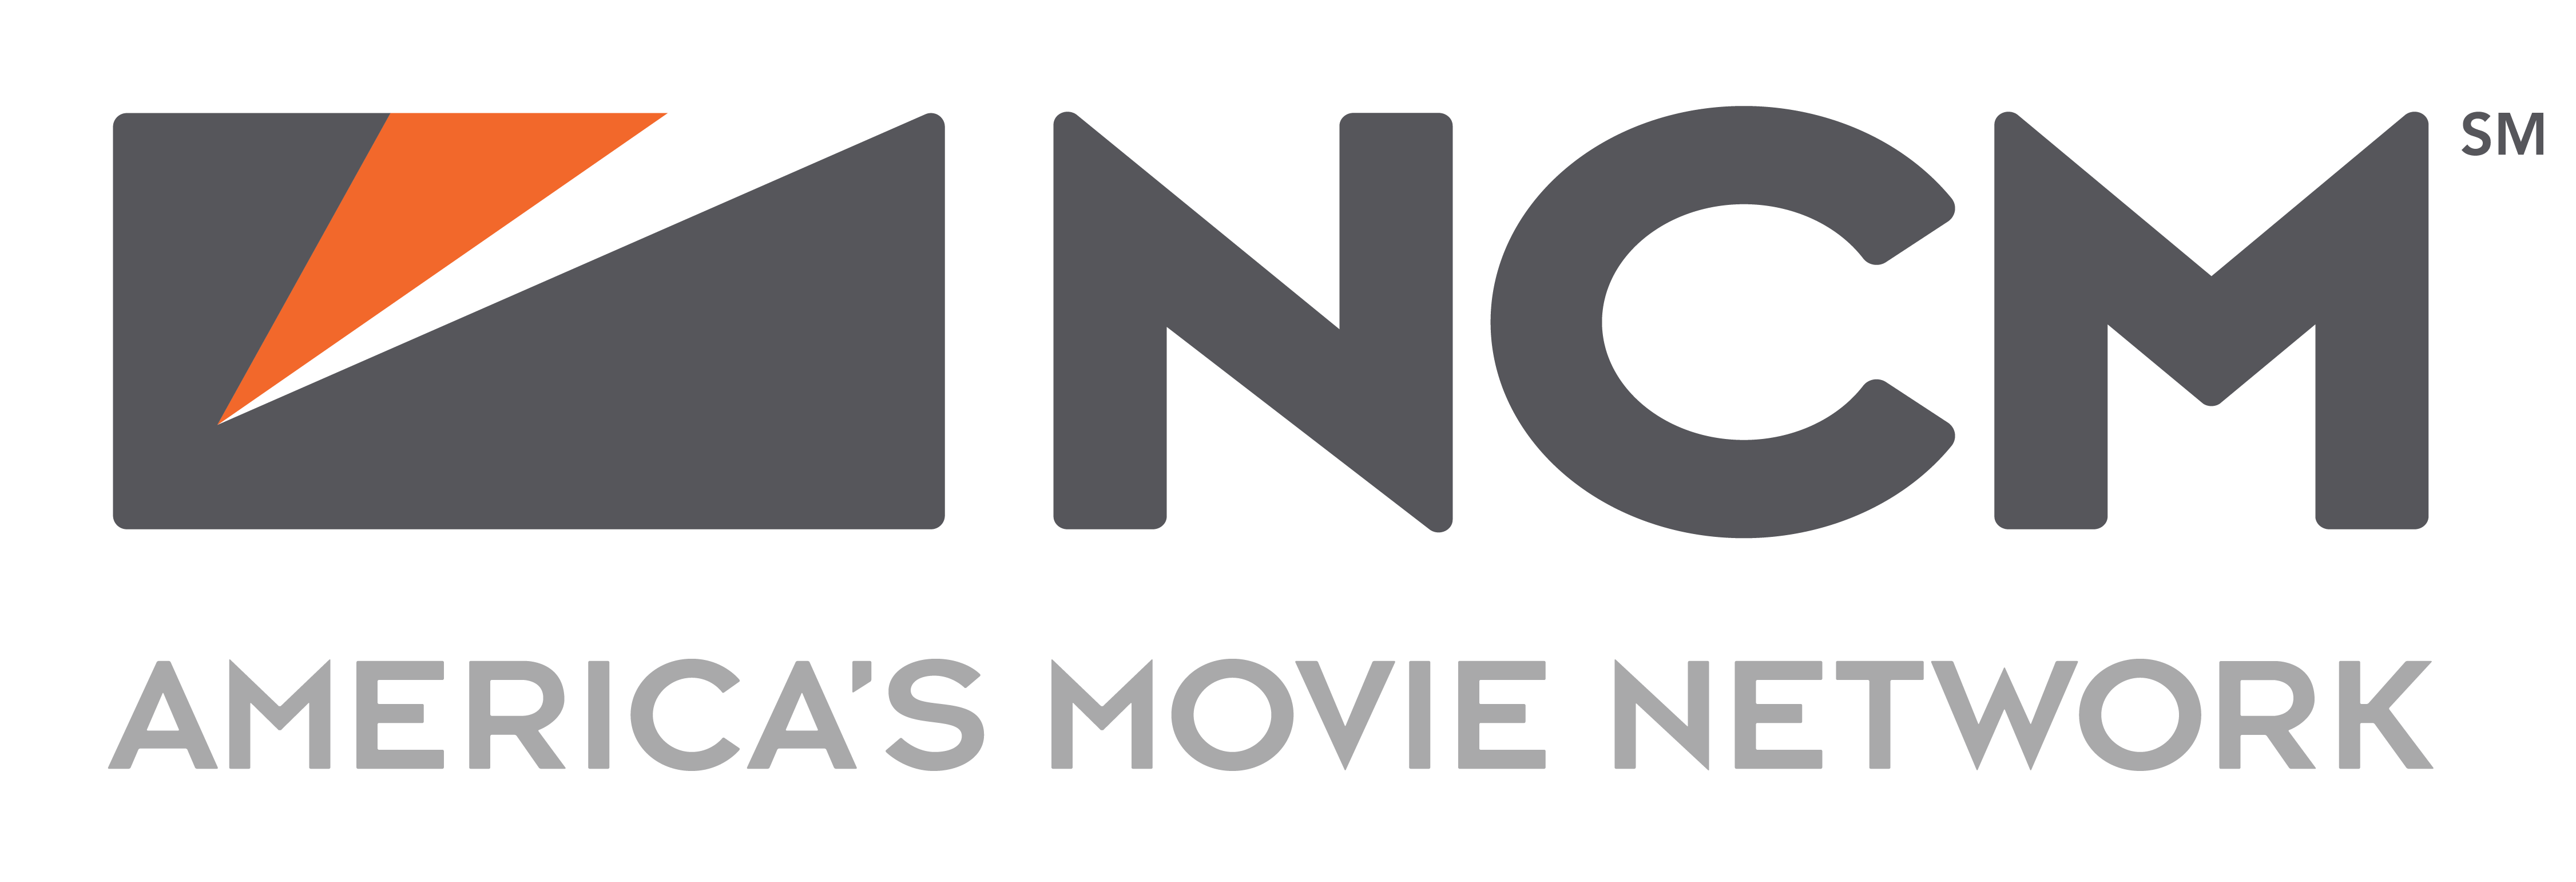 America's Movie Network